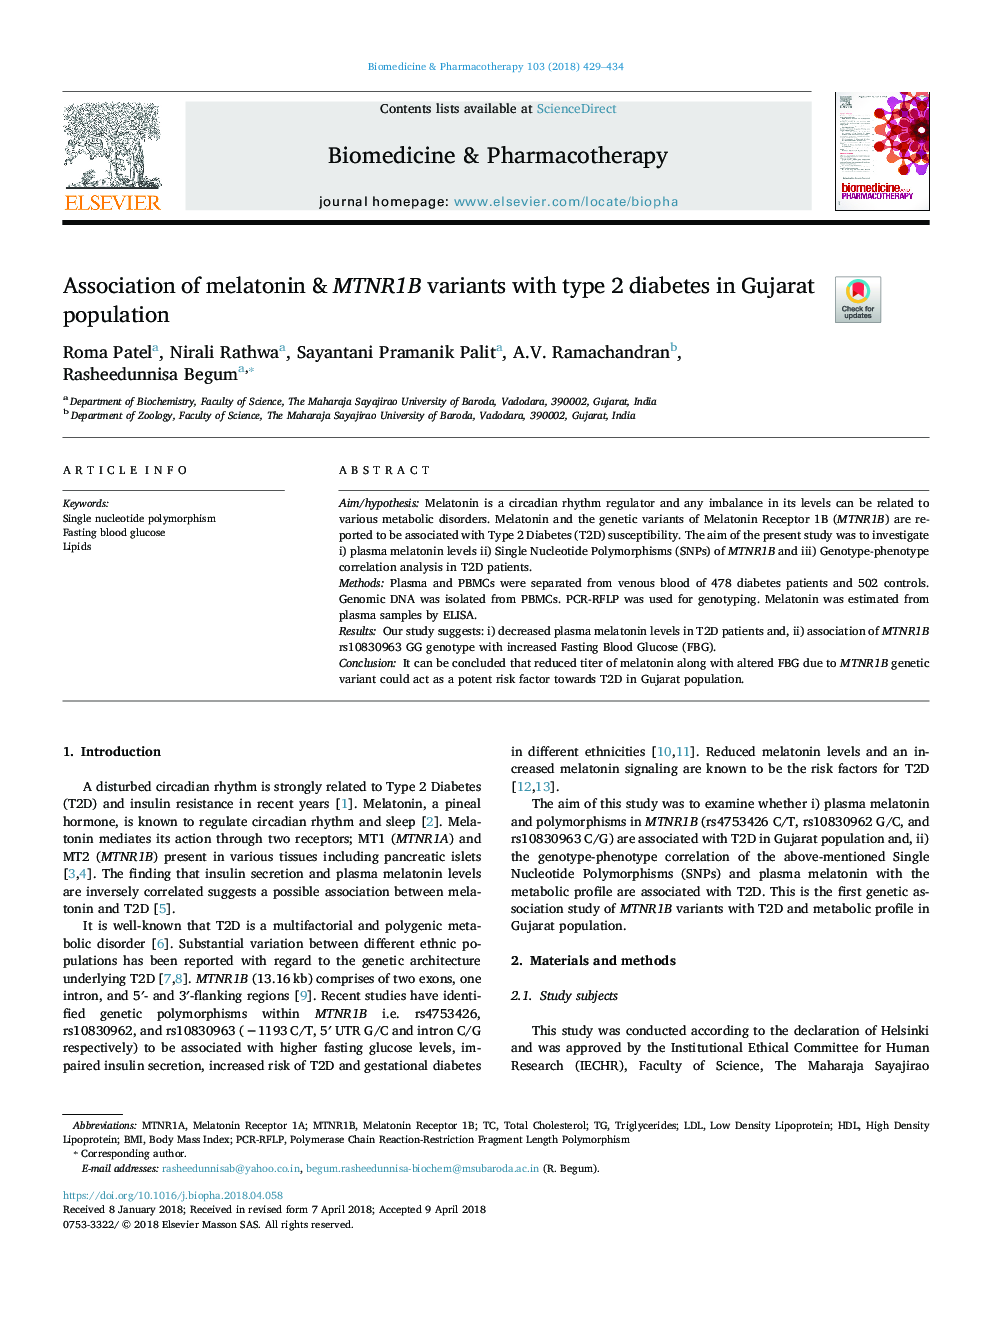 Association of melatonin & MTNR1B variants with type 2 diabetes in Gujarat population